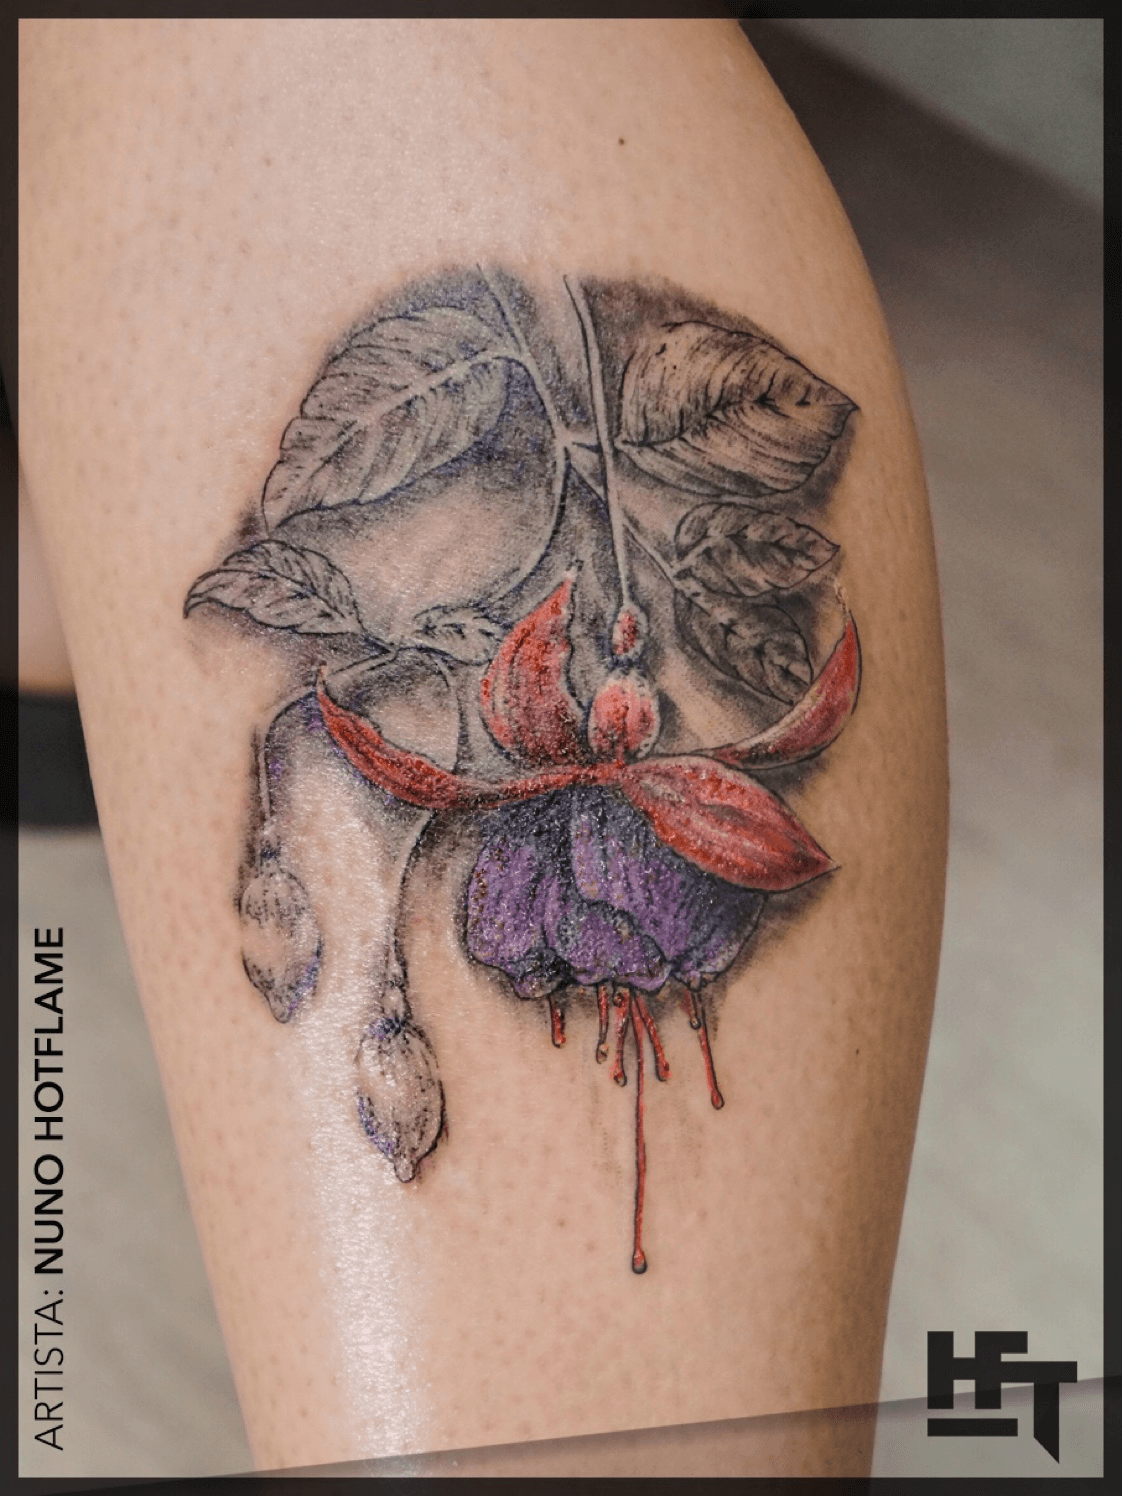 𝓢𝓾𝓼𝓪𝓷𝓷𝓪𝓱 𝓖𝓻𝓲𝓰𝓰𝓼 𝓣𝓪𝓽𝓽𝓸𝓸 on Instagram Fuchsia flowers  Work in progress Thank you Tiffany eternalink tattoo fuchsia flowers  flowertattoo femaletattooartist